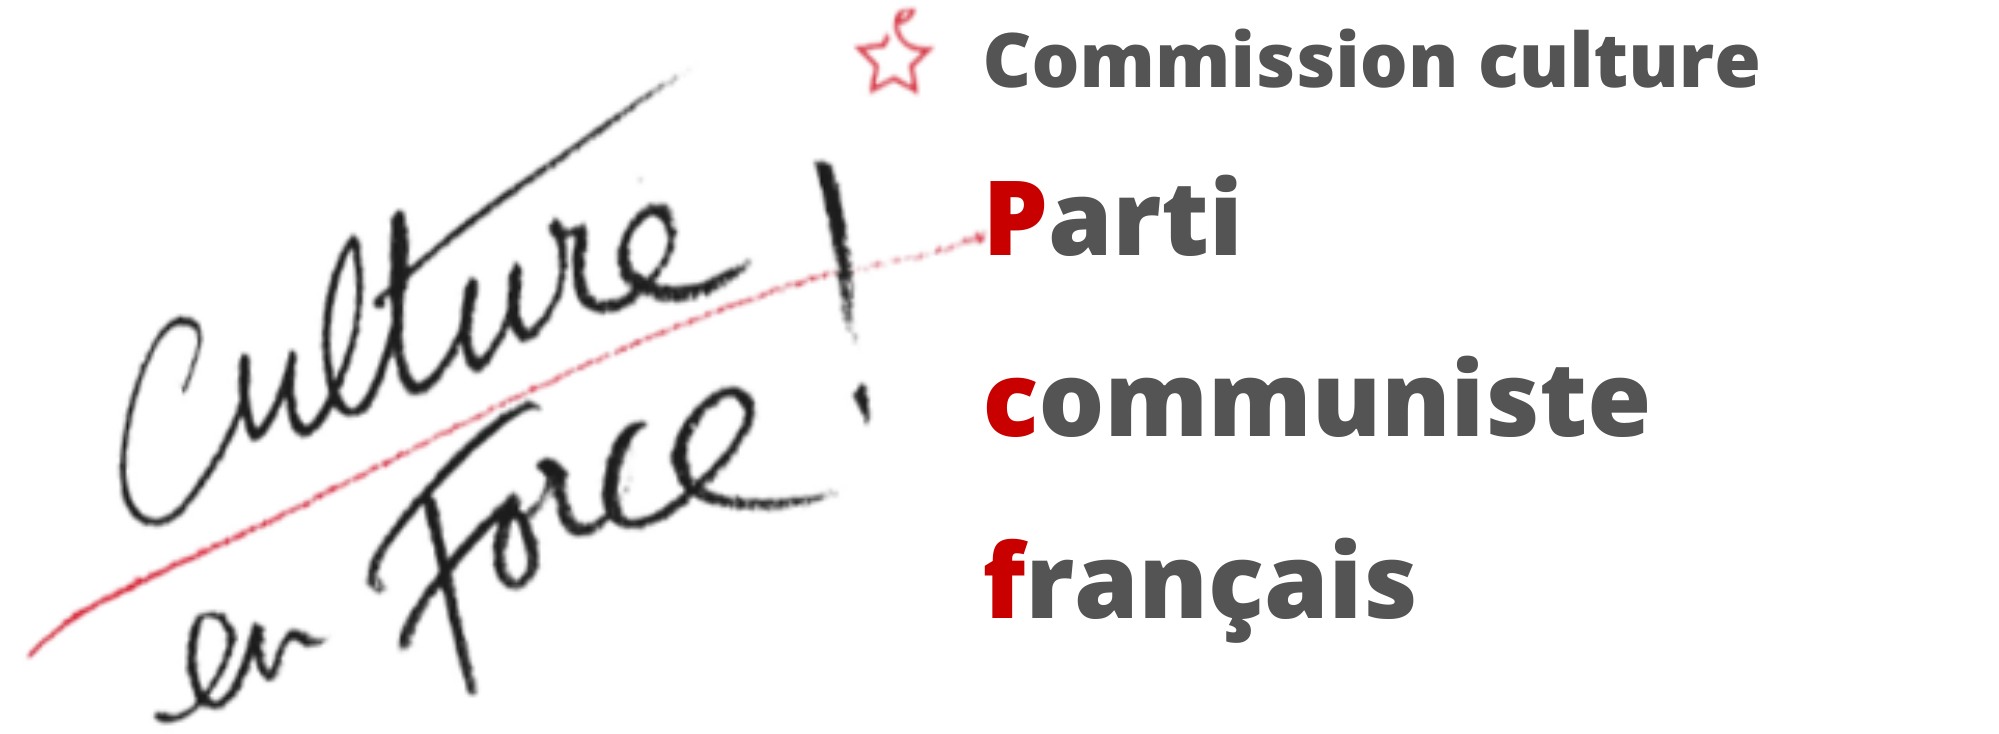 PCF-Commission culture